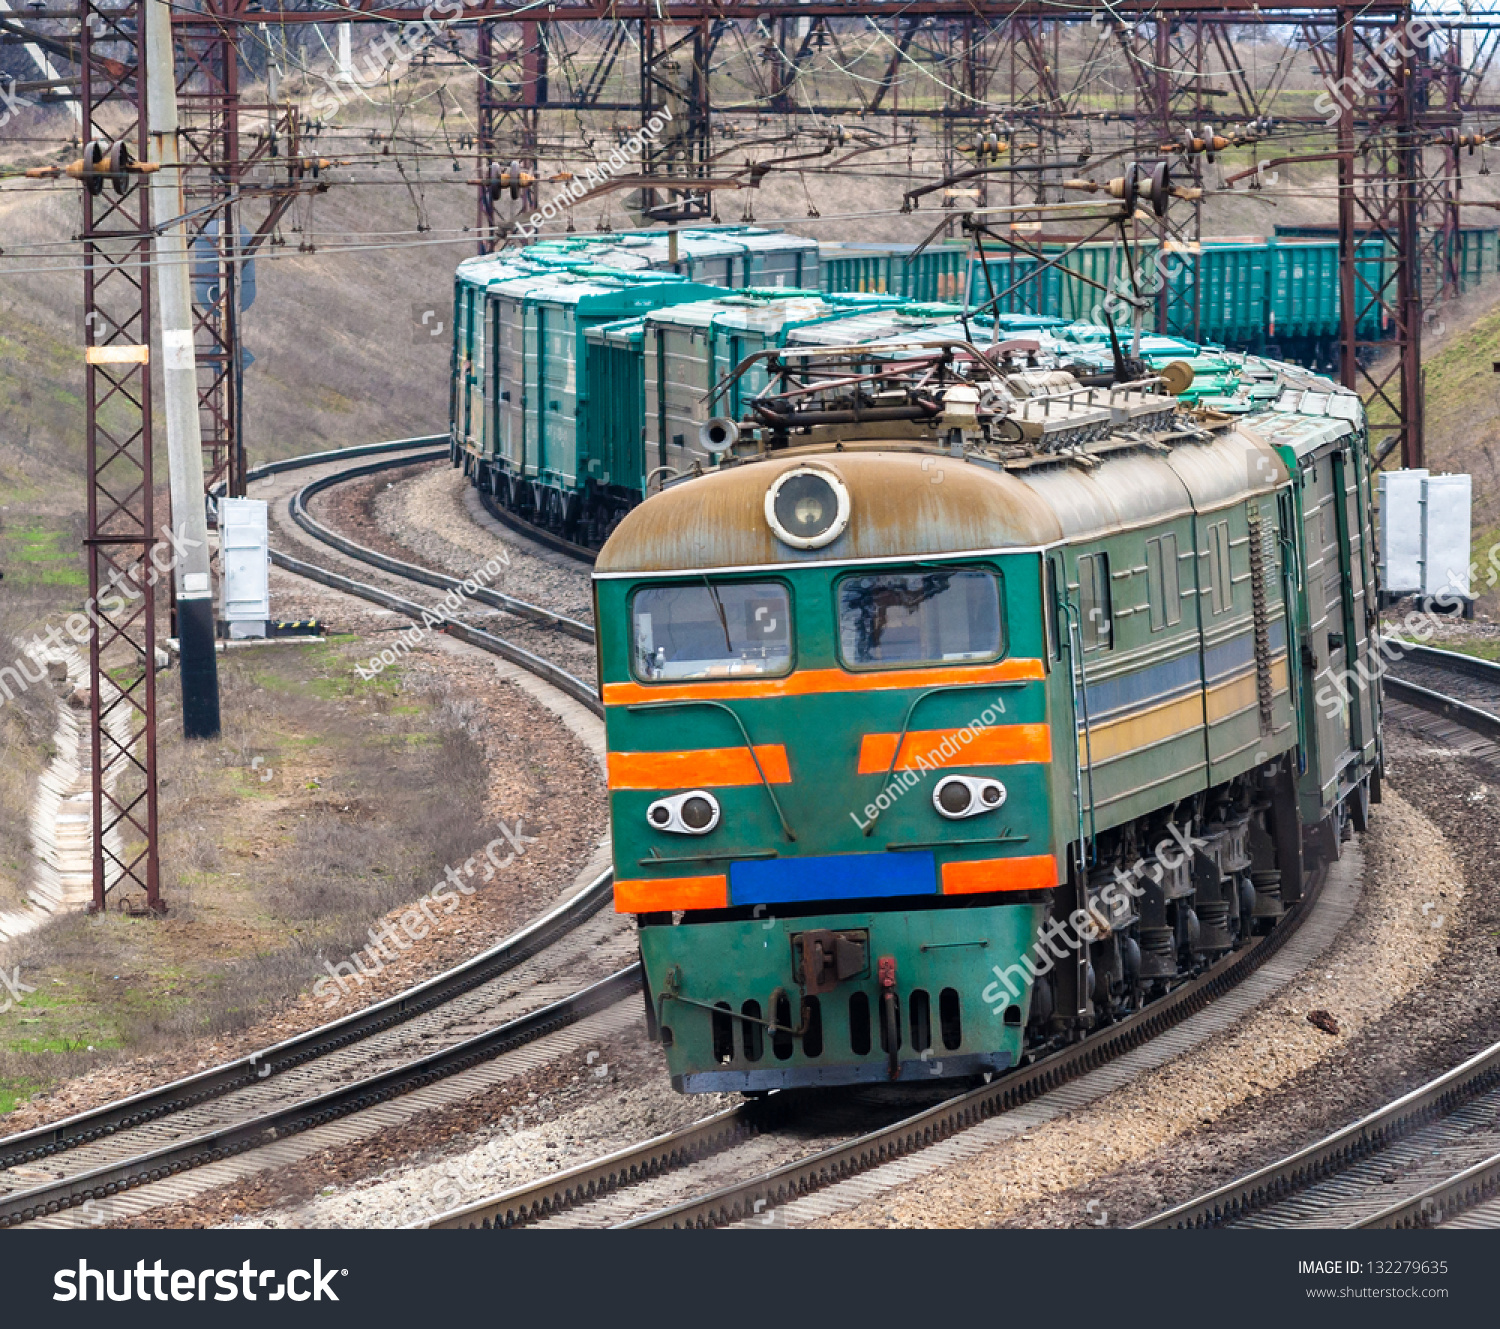 Heavy Electric Freight Train Ukraine Stock Photo 132279635 - Shutterstock